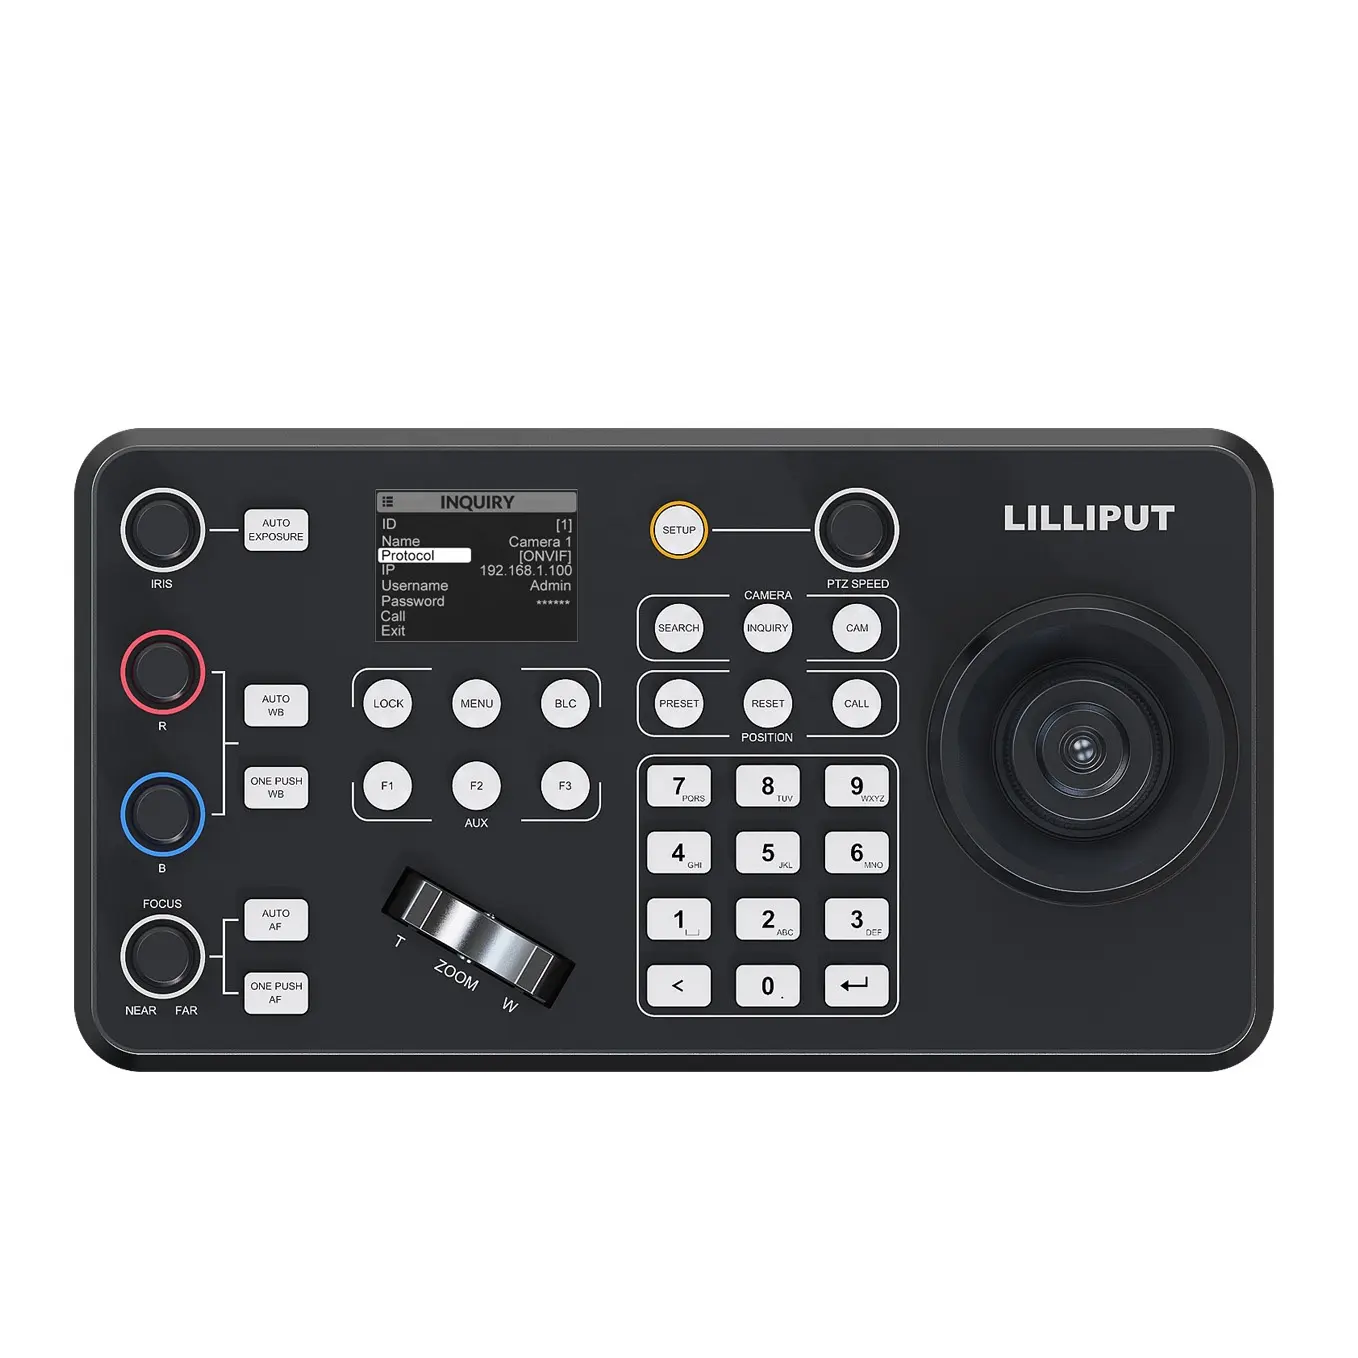 LILLIPUT PTZ Camera Joystick Controller K1 Keyboard Control Iris, Focus, White Balance, Exposure